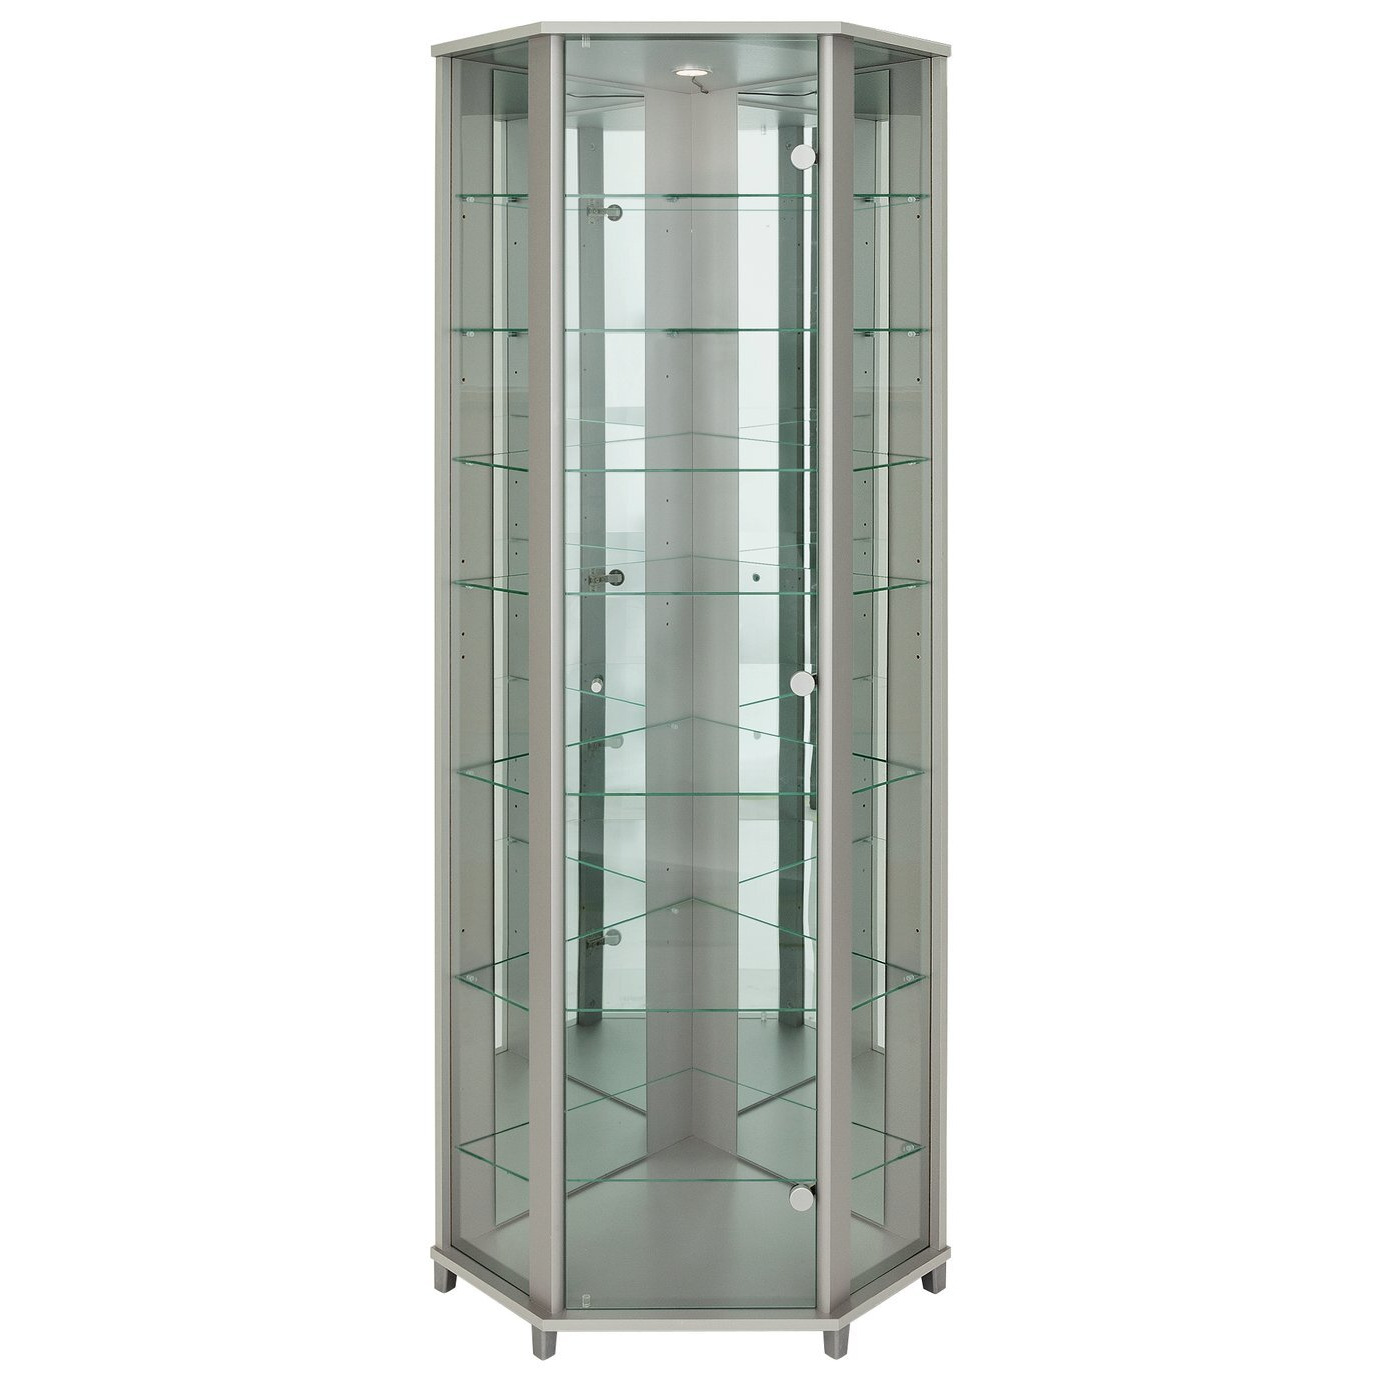 Argos Home 7 Shelf Glass Corner Display Cabinet - Silver - image 1